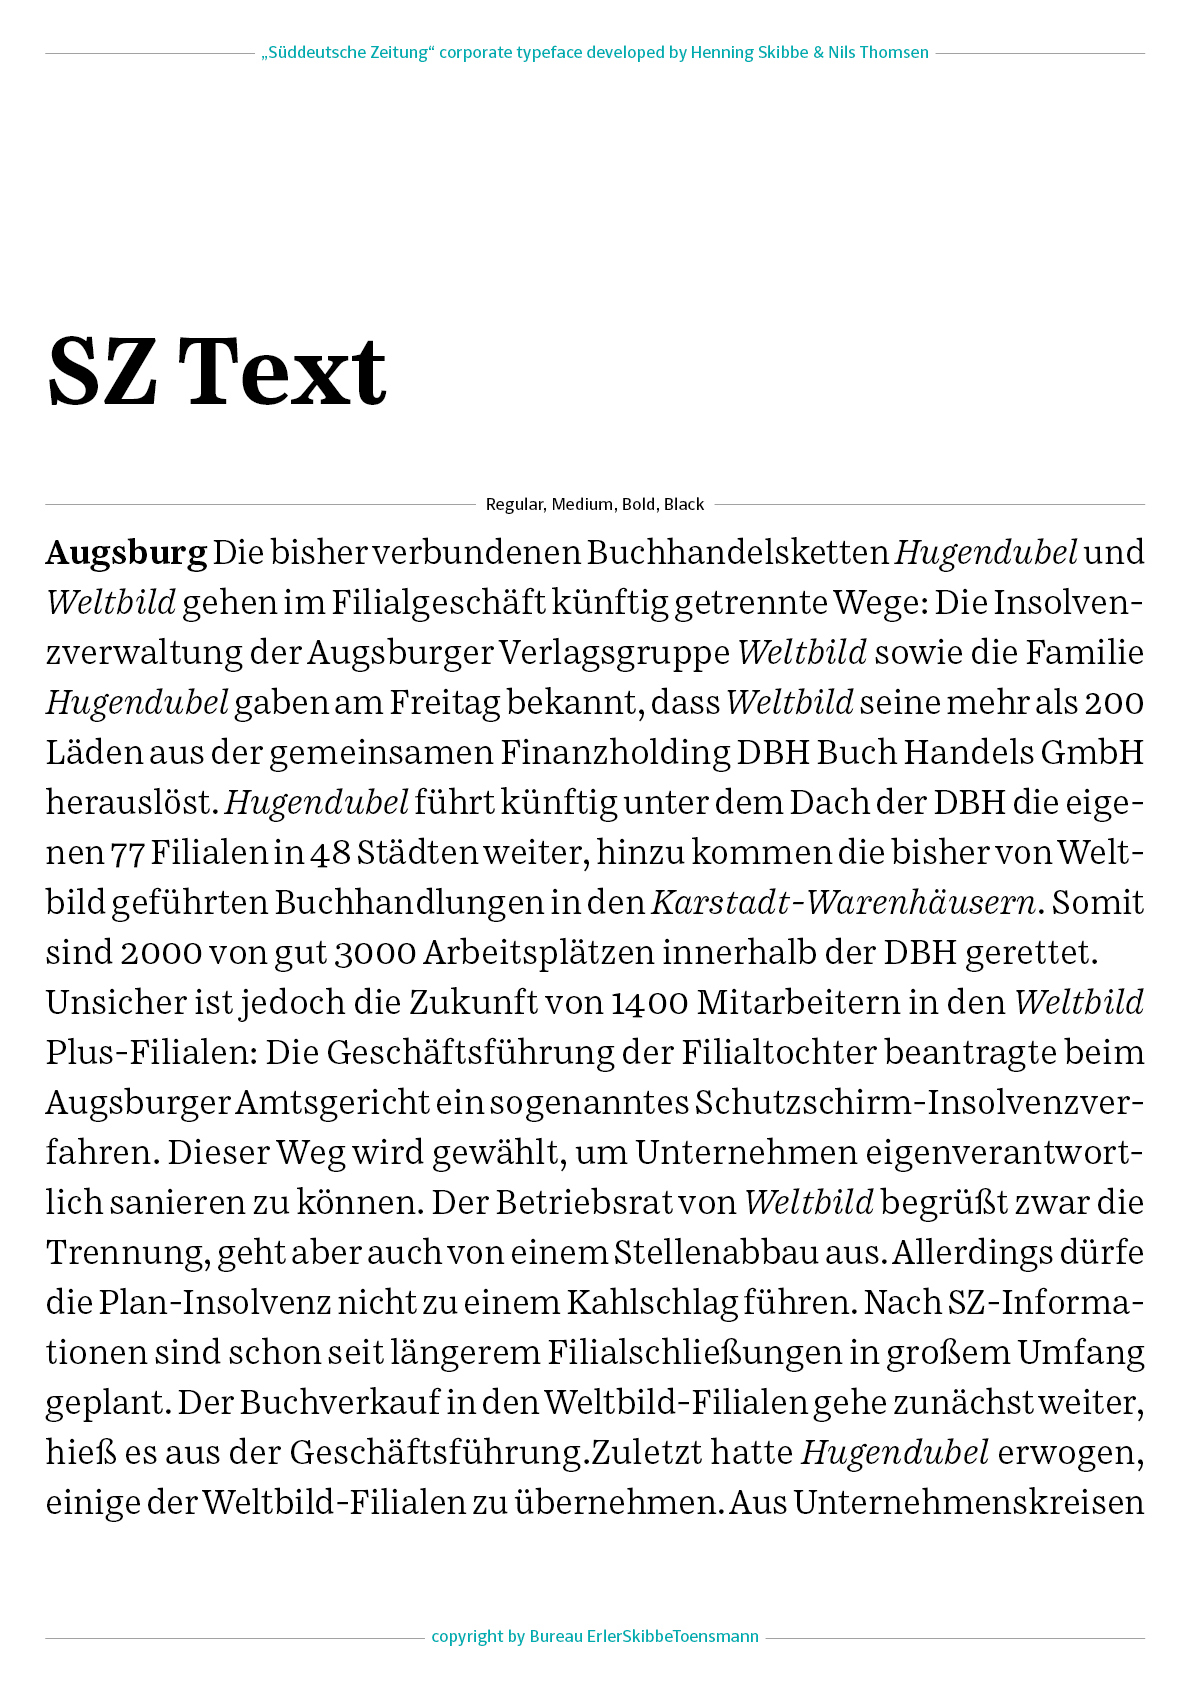 corporate typeface typedesign Typeface Süddeutsche Zeitung typeface family Corporate Identity exclusive typeface